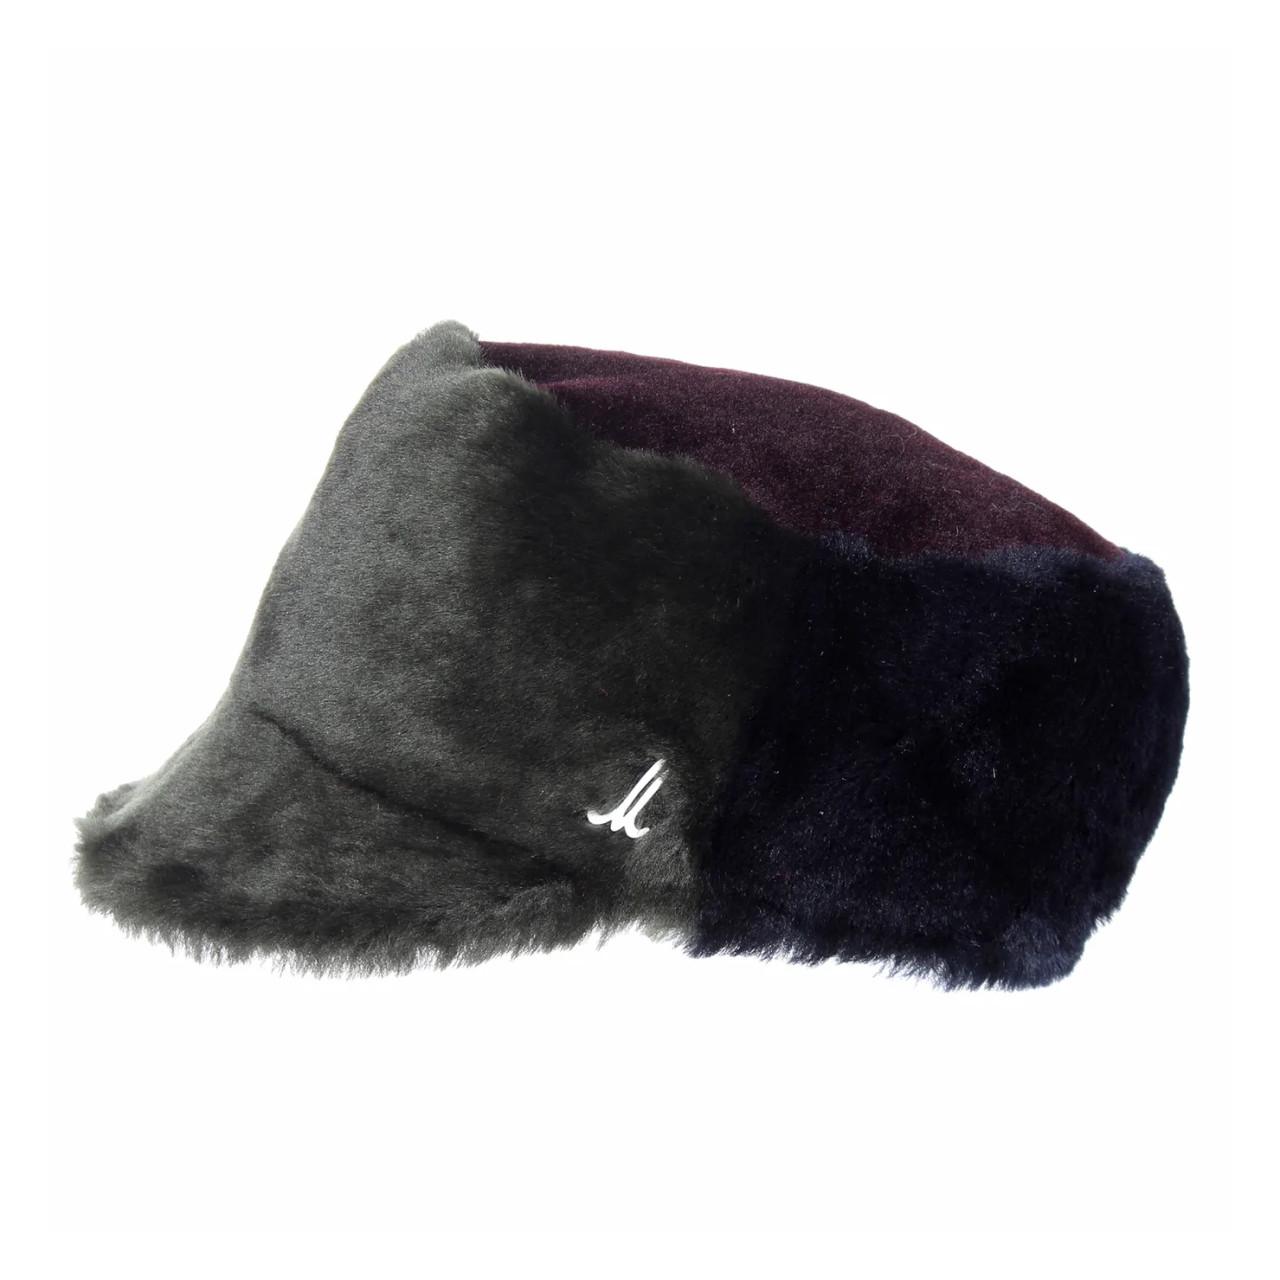 Muhlbauer: Dark Green and Brown Unisex Fur Cap, tomfoolery london